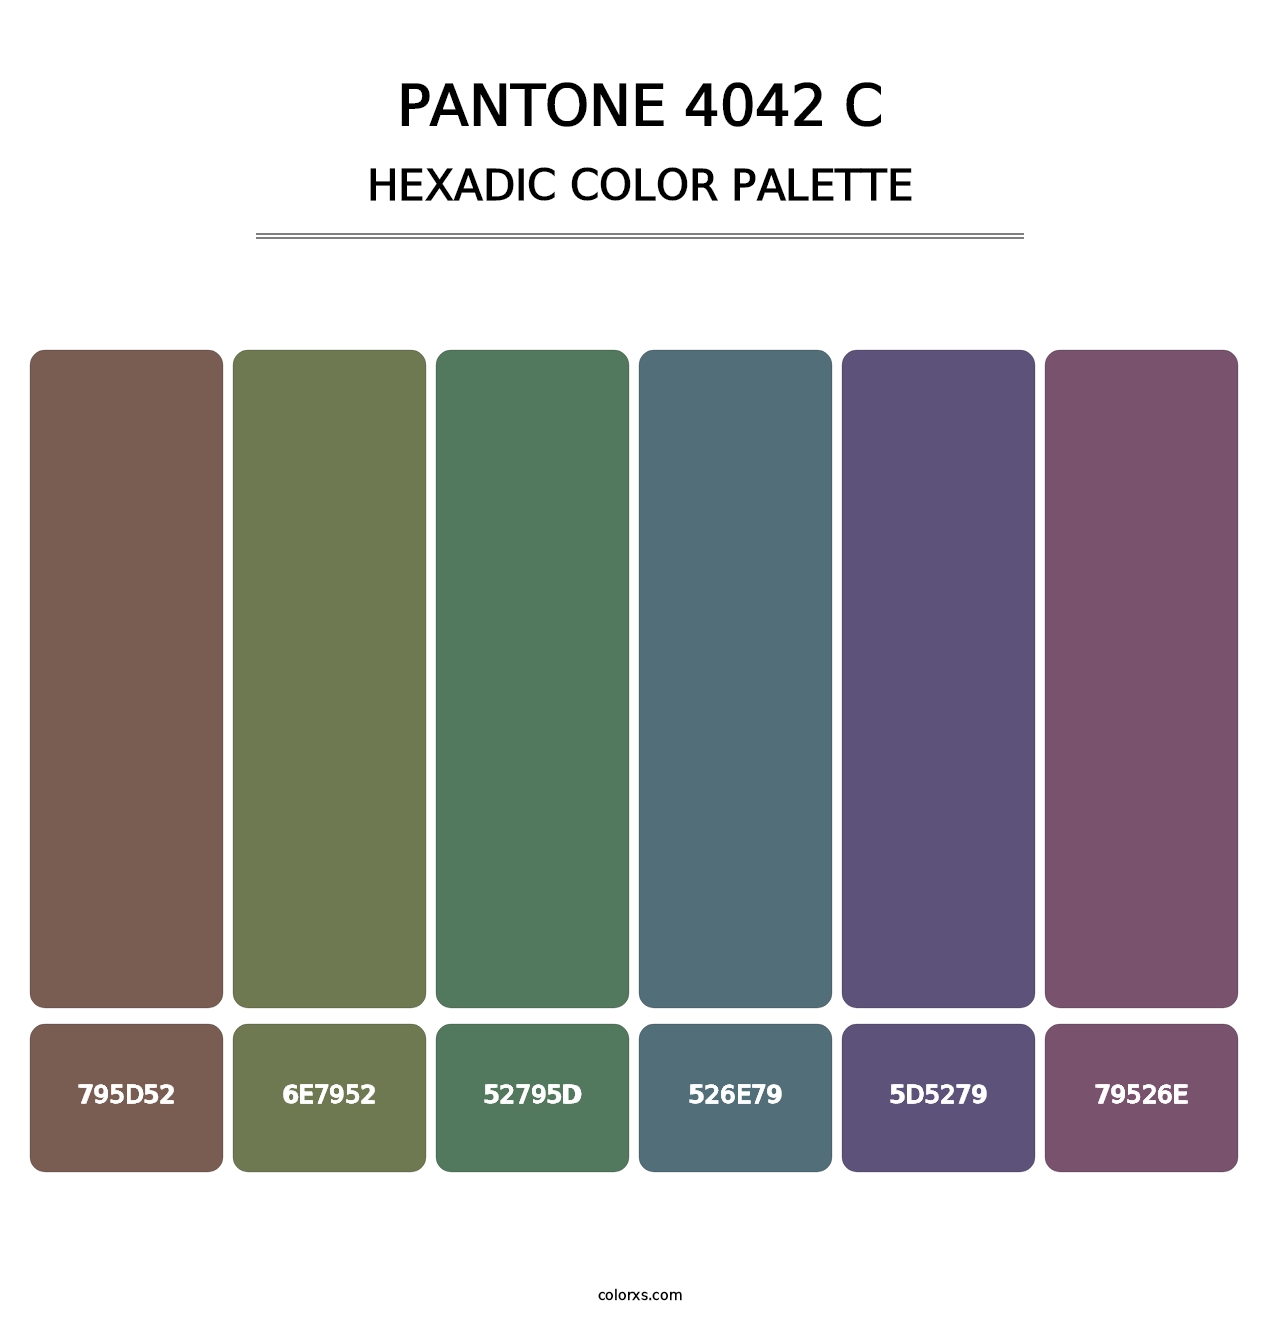 PANTONE 4042 C - Hexadic Color Palette